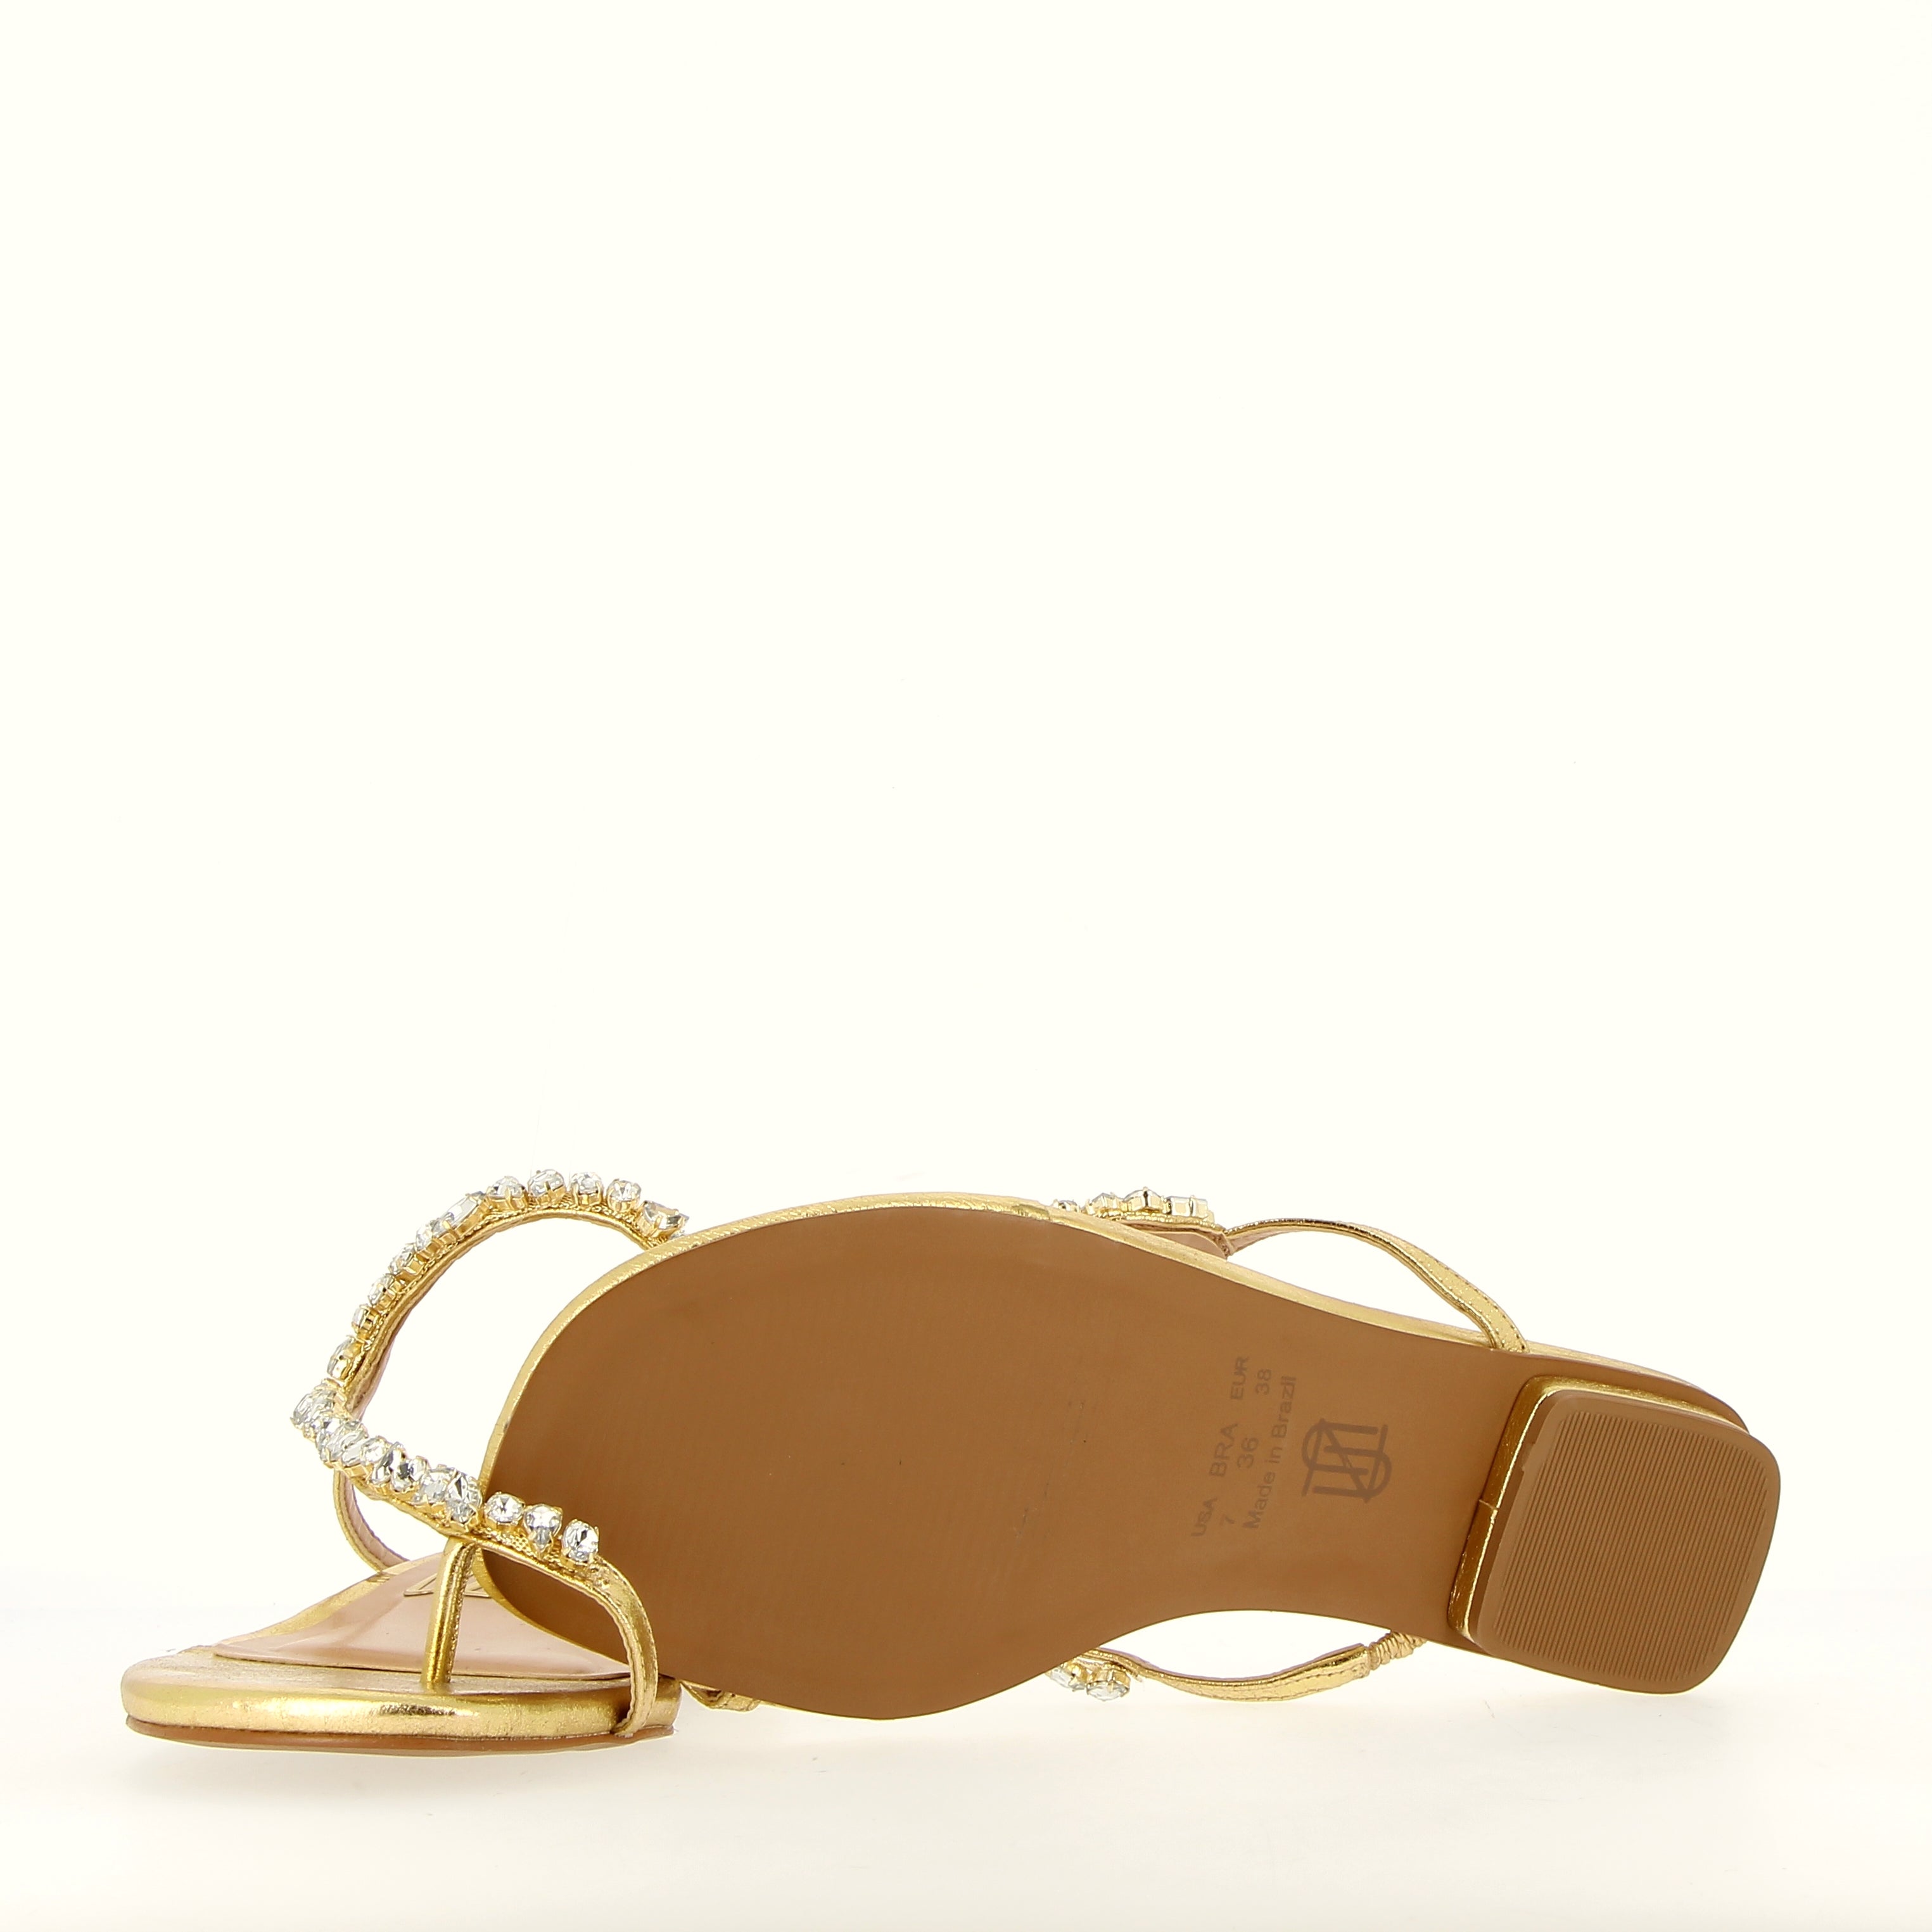 Gold flat sandal with rhinestone chain